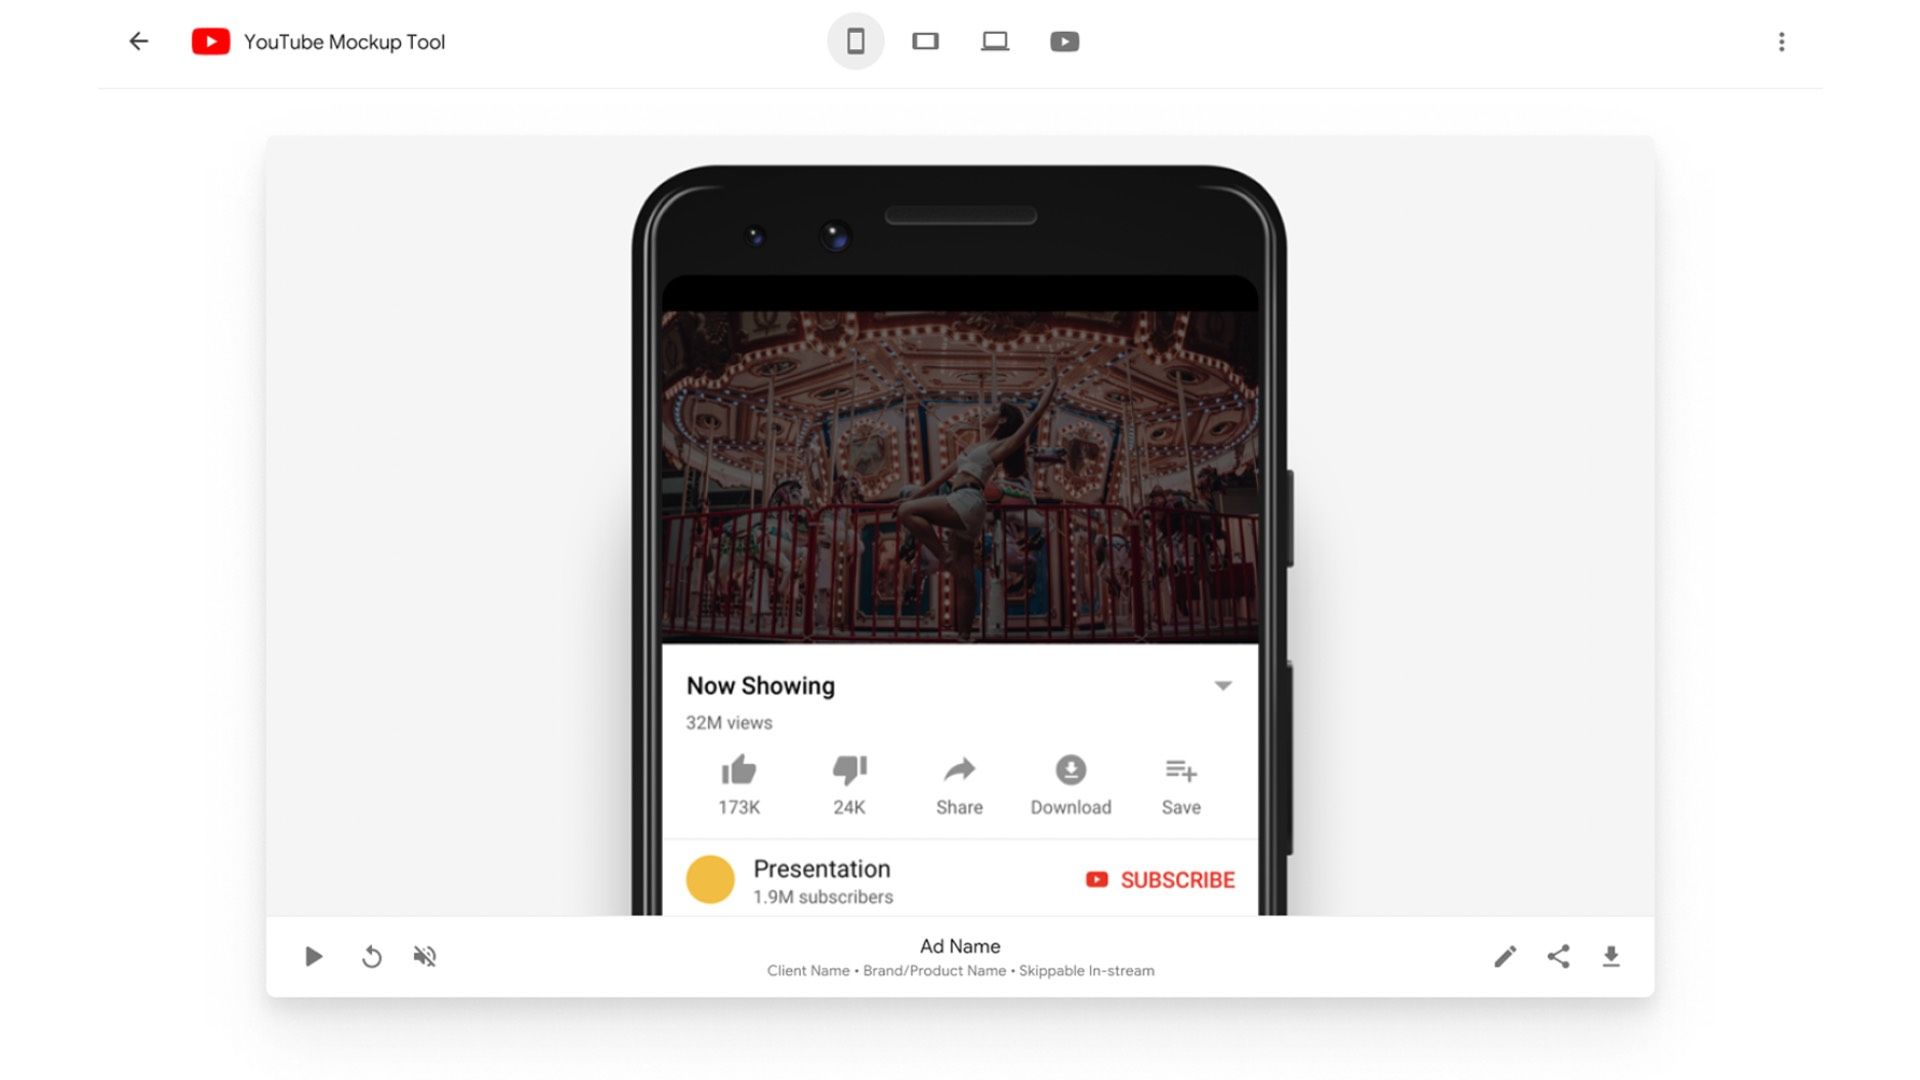 Google retires YouTube Mockup Tool